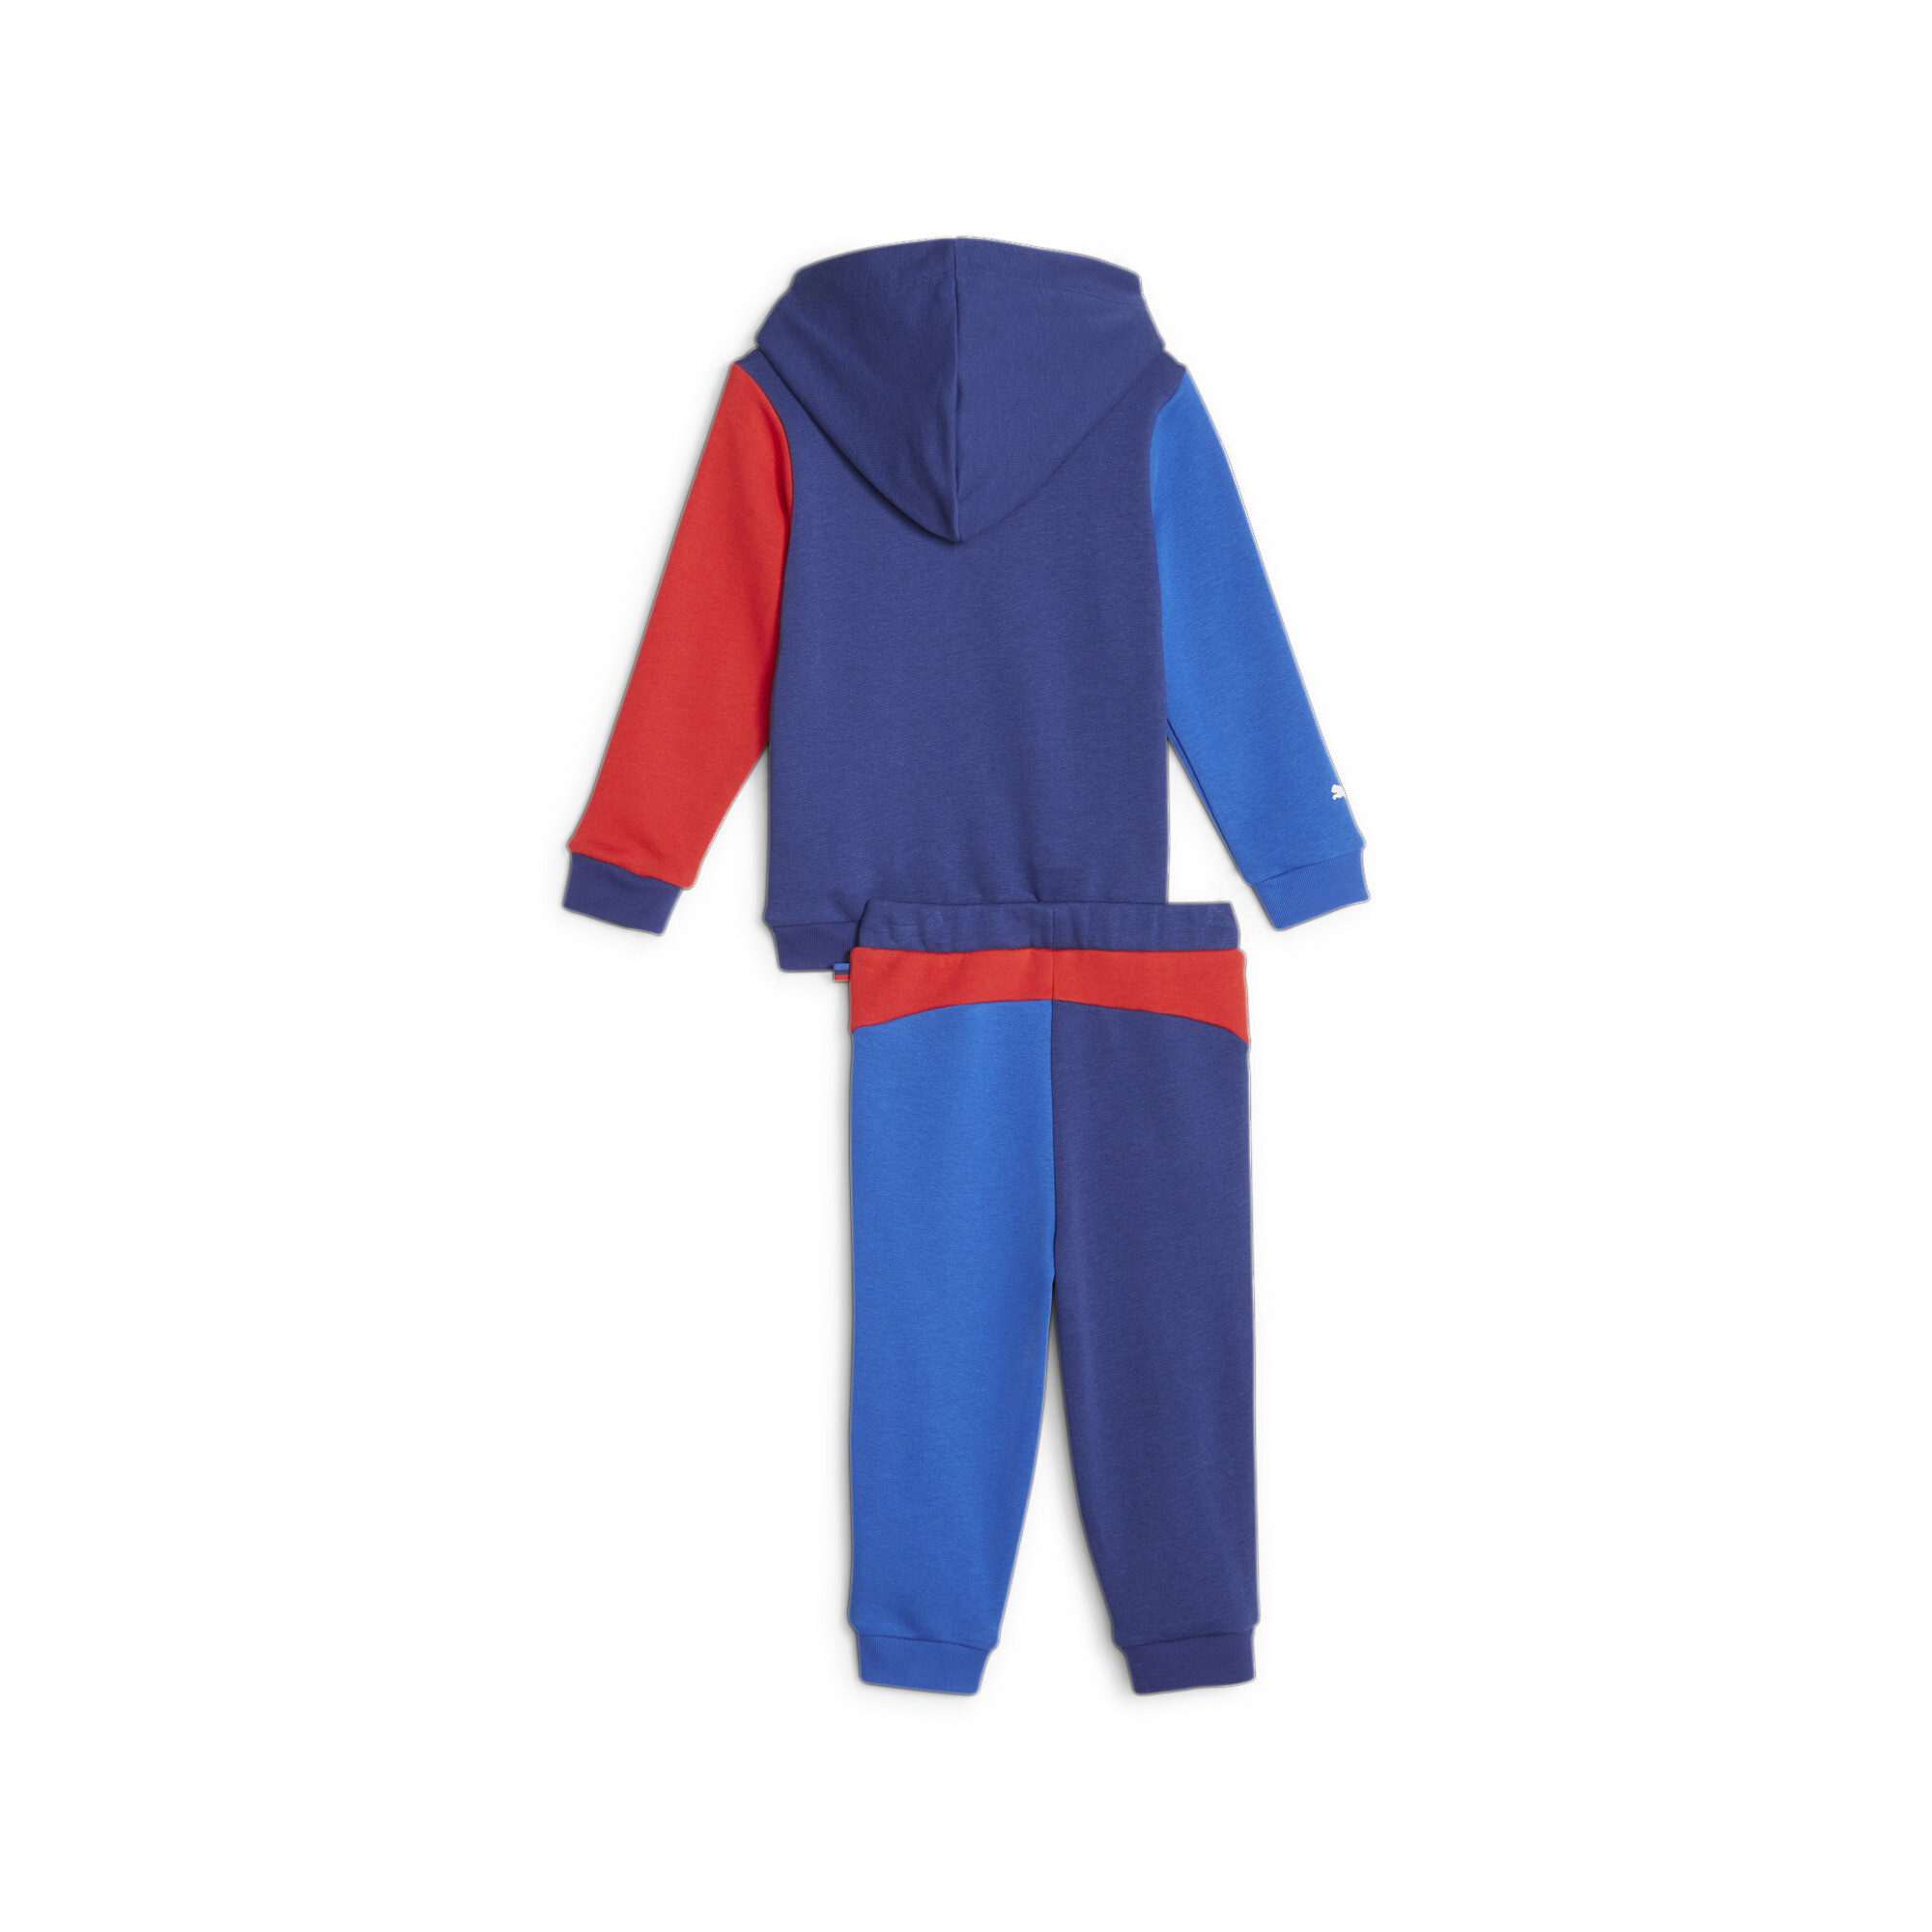 Puma BMW M Motorsport Kids' Motorsport Jogger Suit, Blue, Size 3-4Y, Clothing